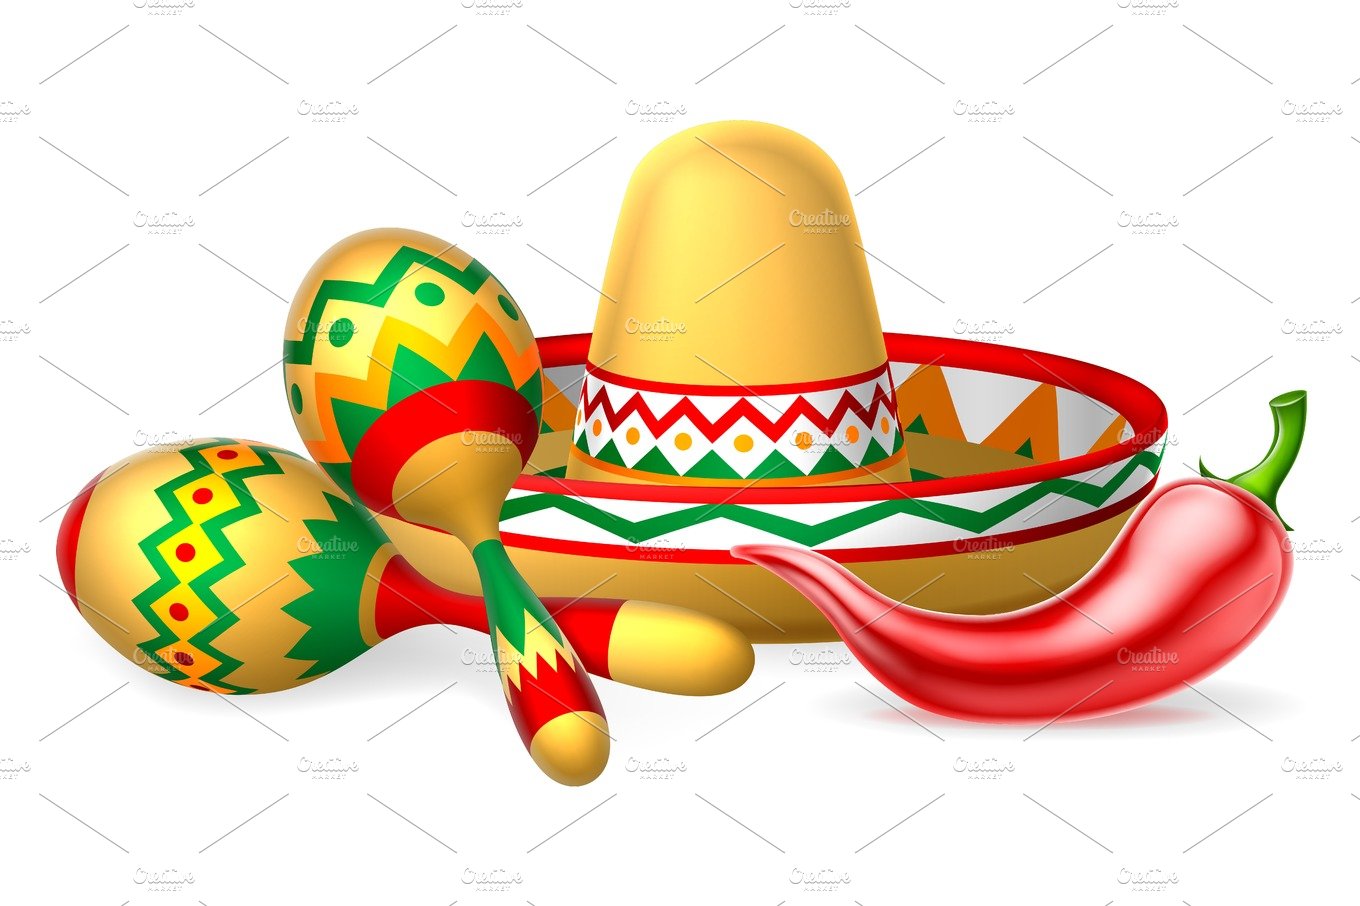 Mexican Sombrero Maracas and Chilli Pepper cover image.